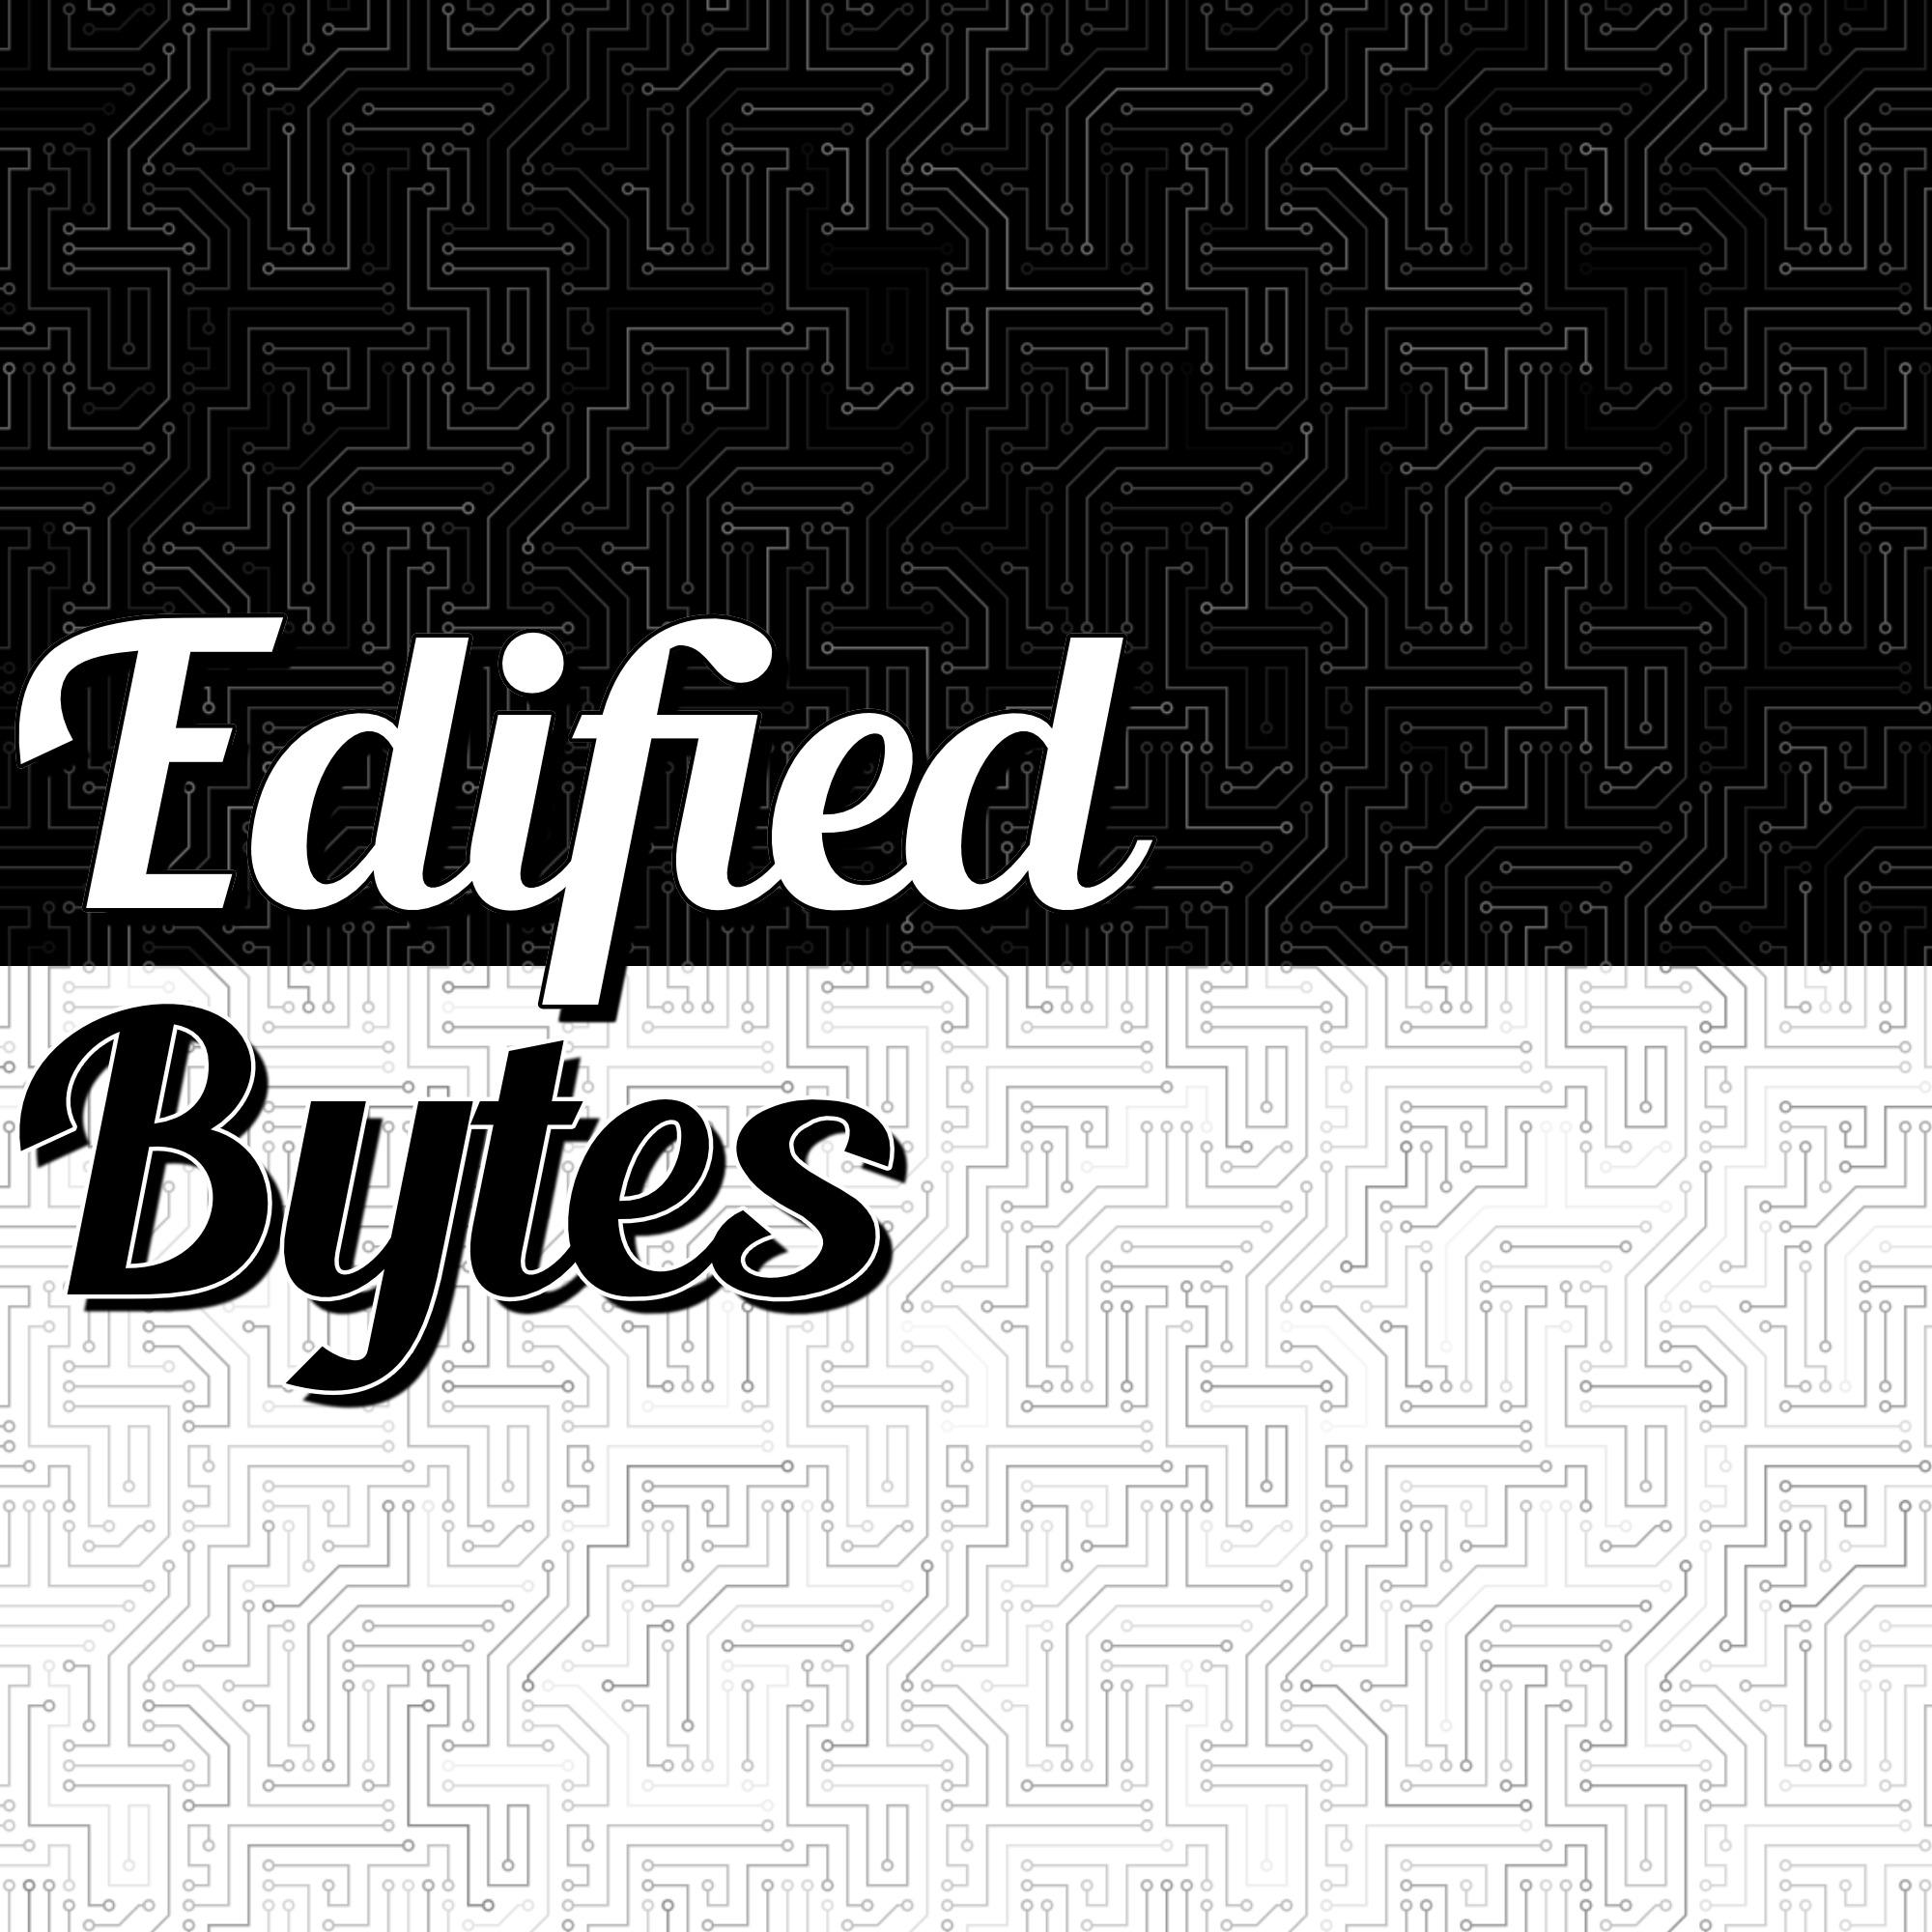 Edified Bytes